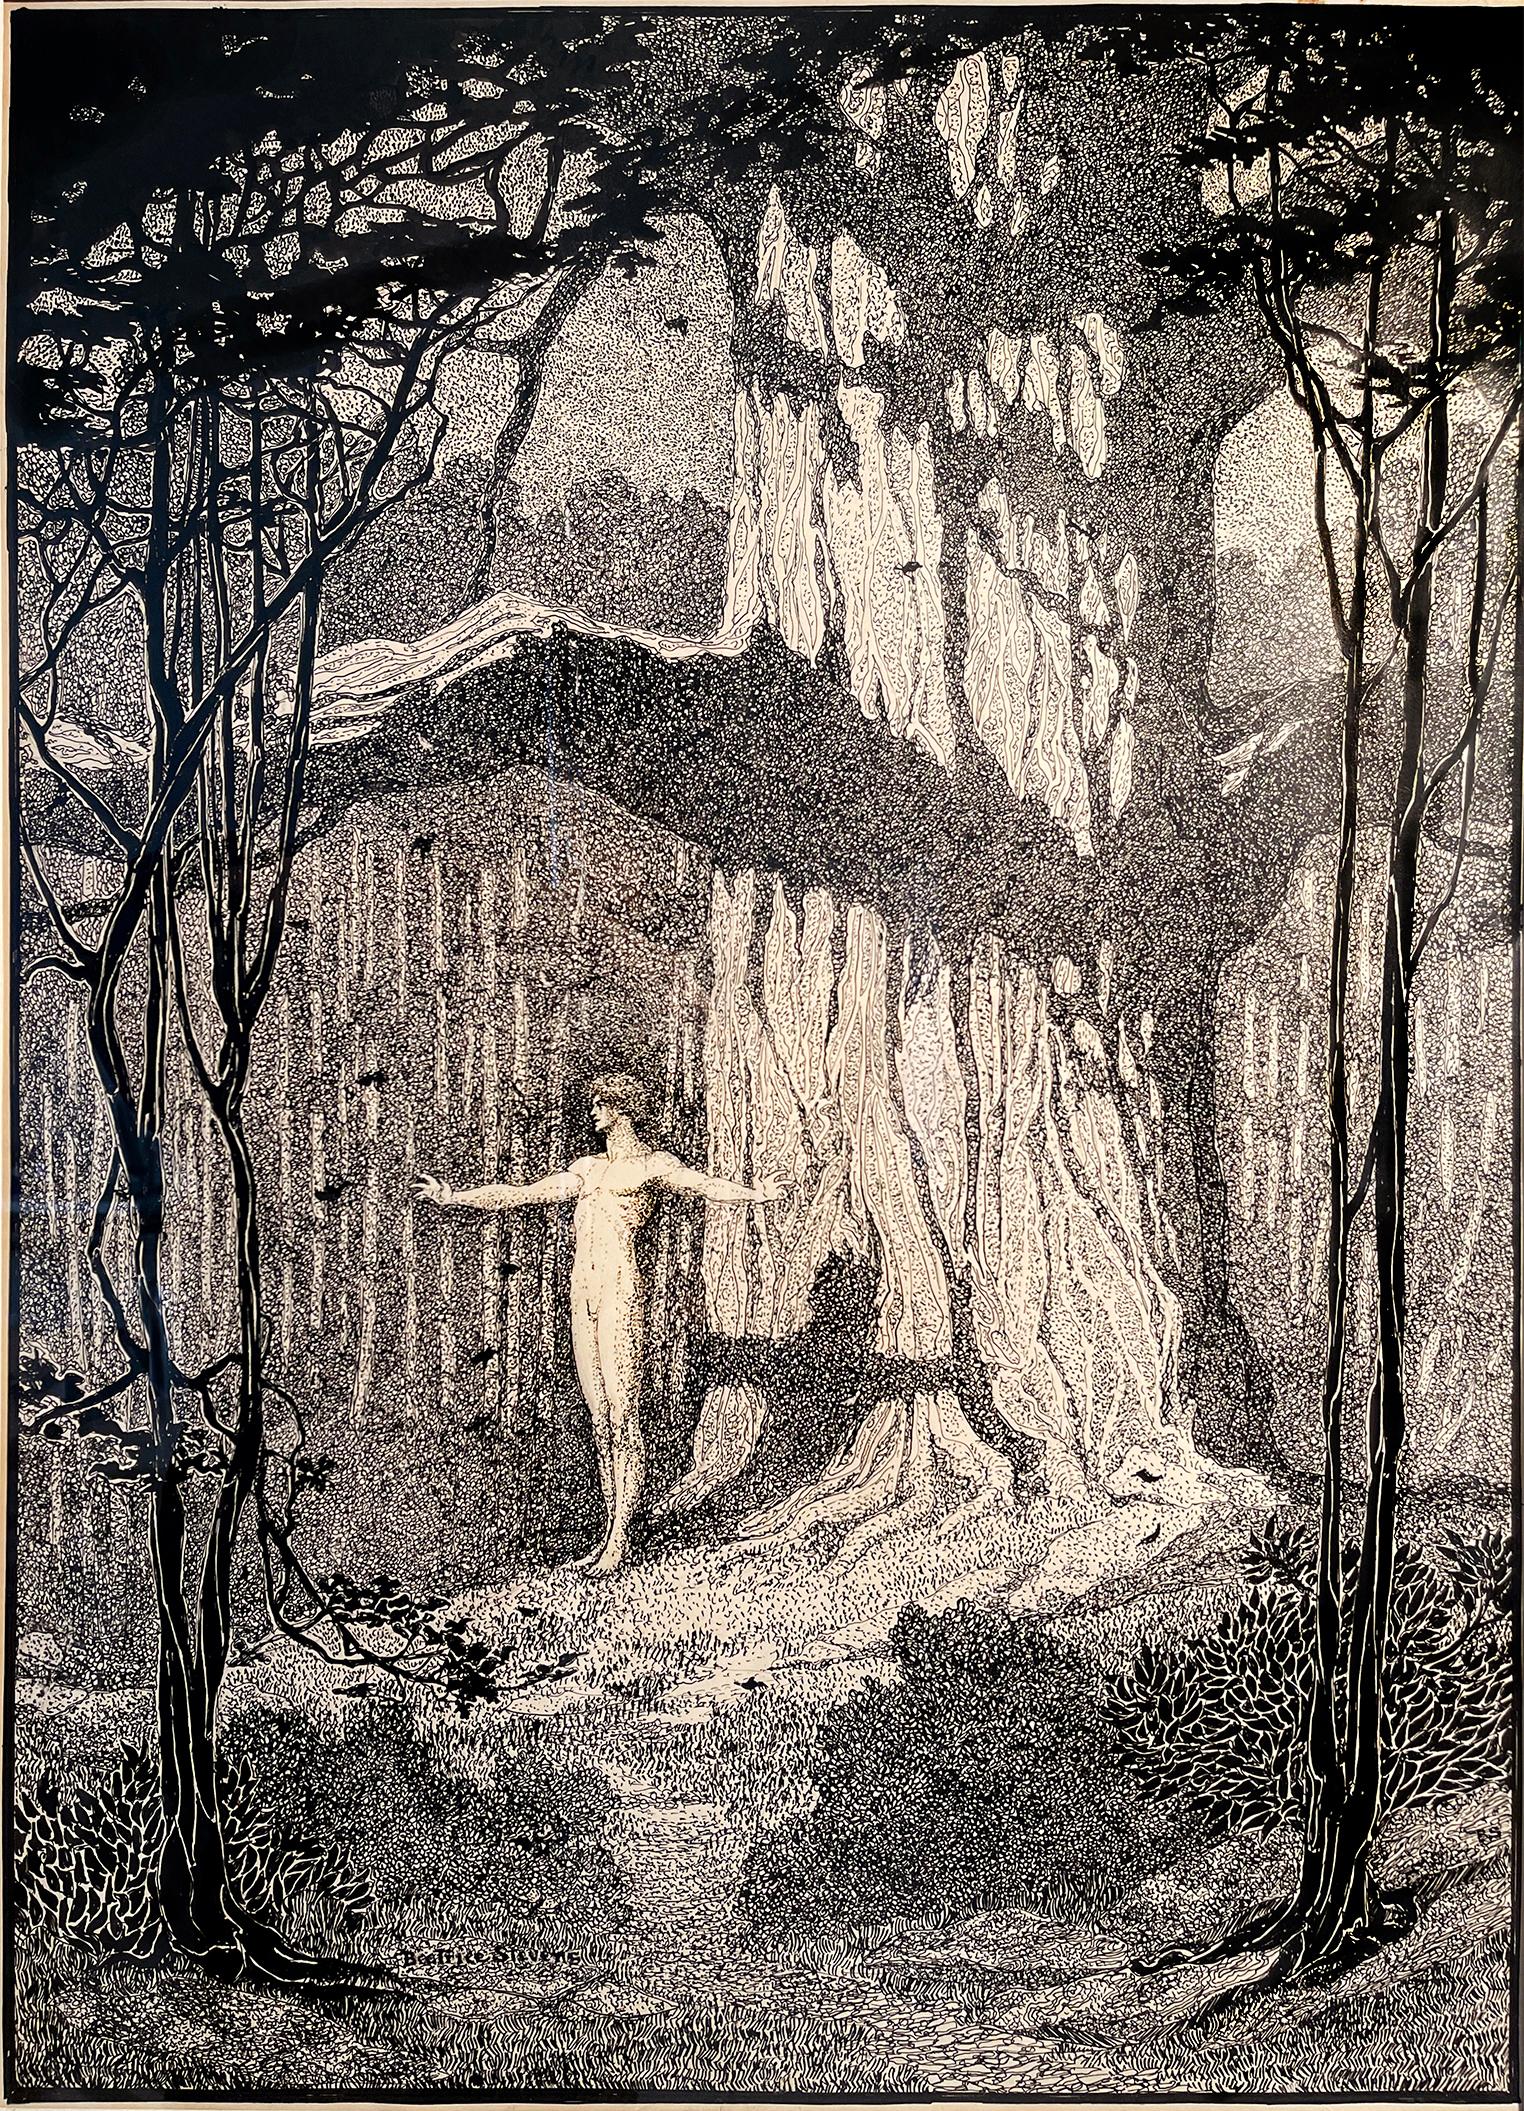 Nude Man in Idyllic Fantasy  Woodland   Pre-Raphaelite  Female Illustrator - Art by Lucy Beatrice Stevens